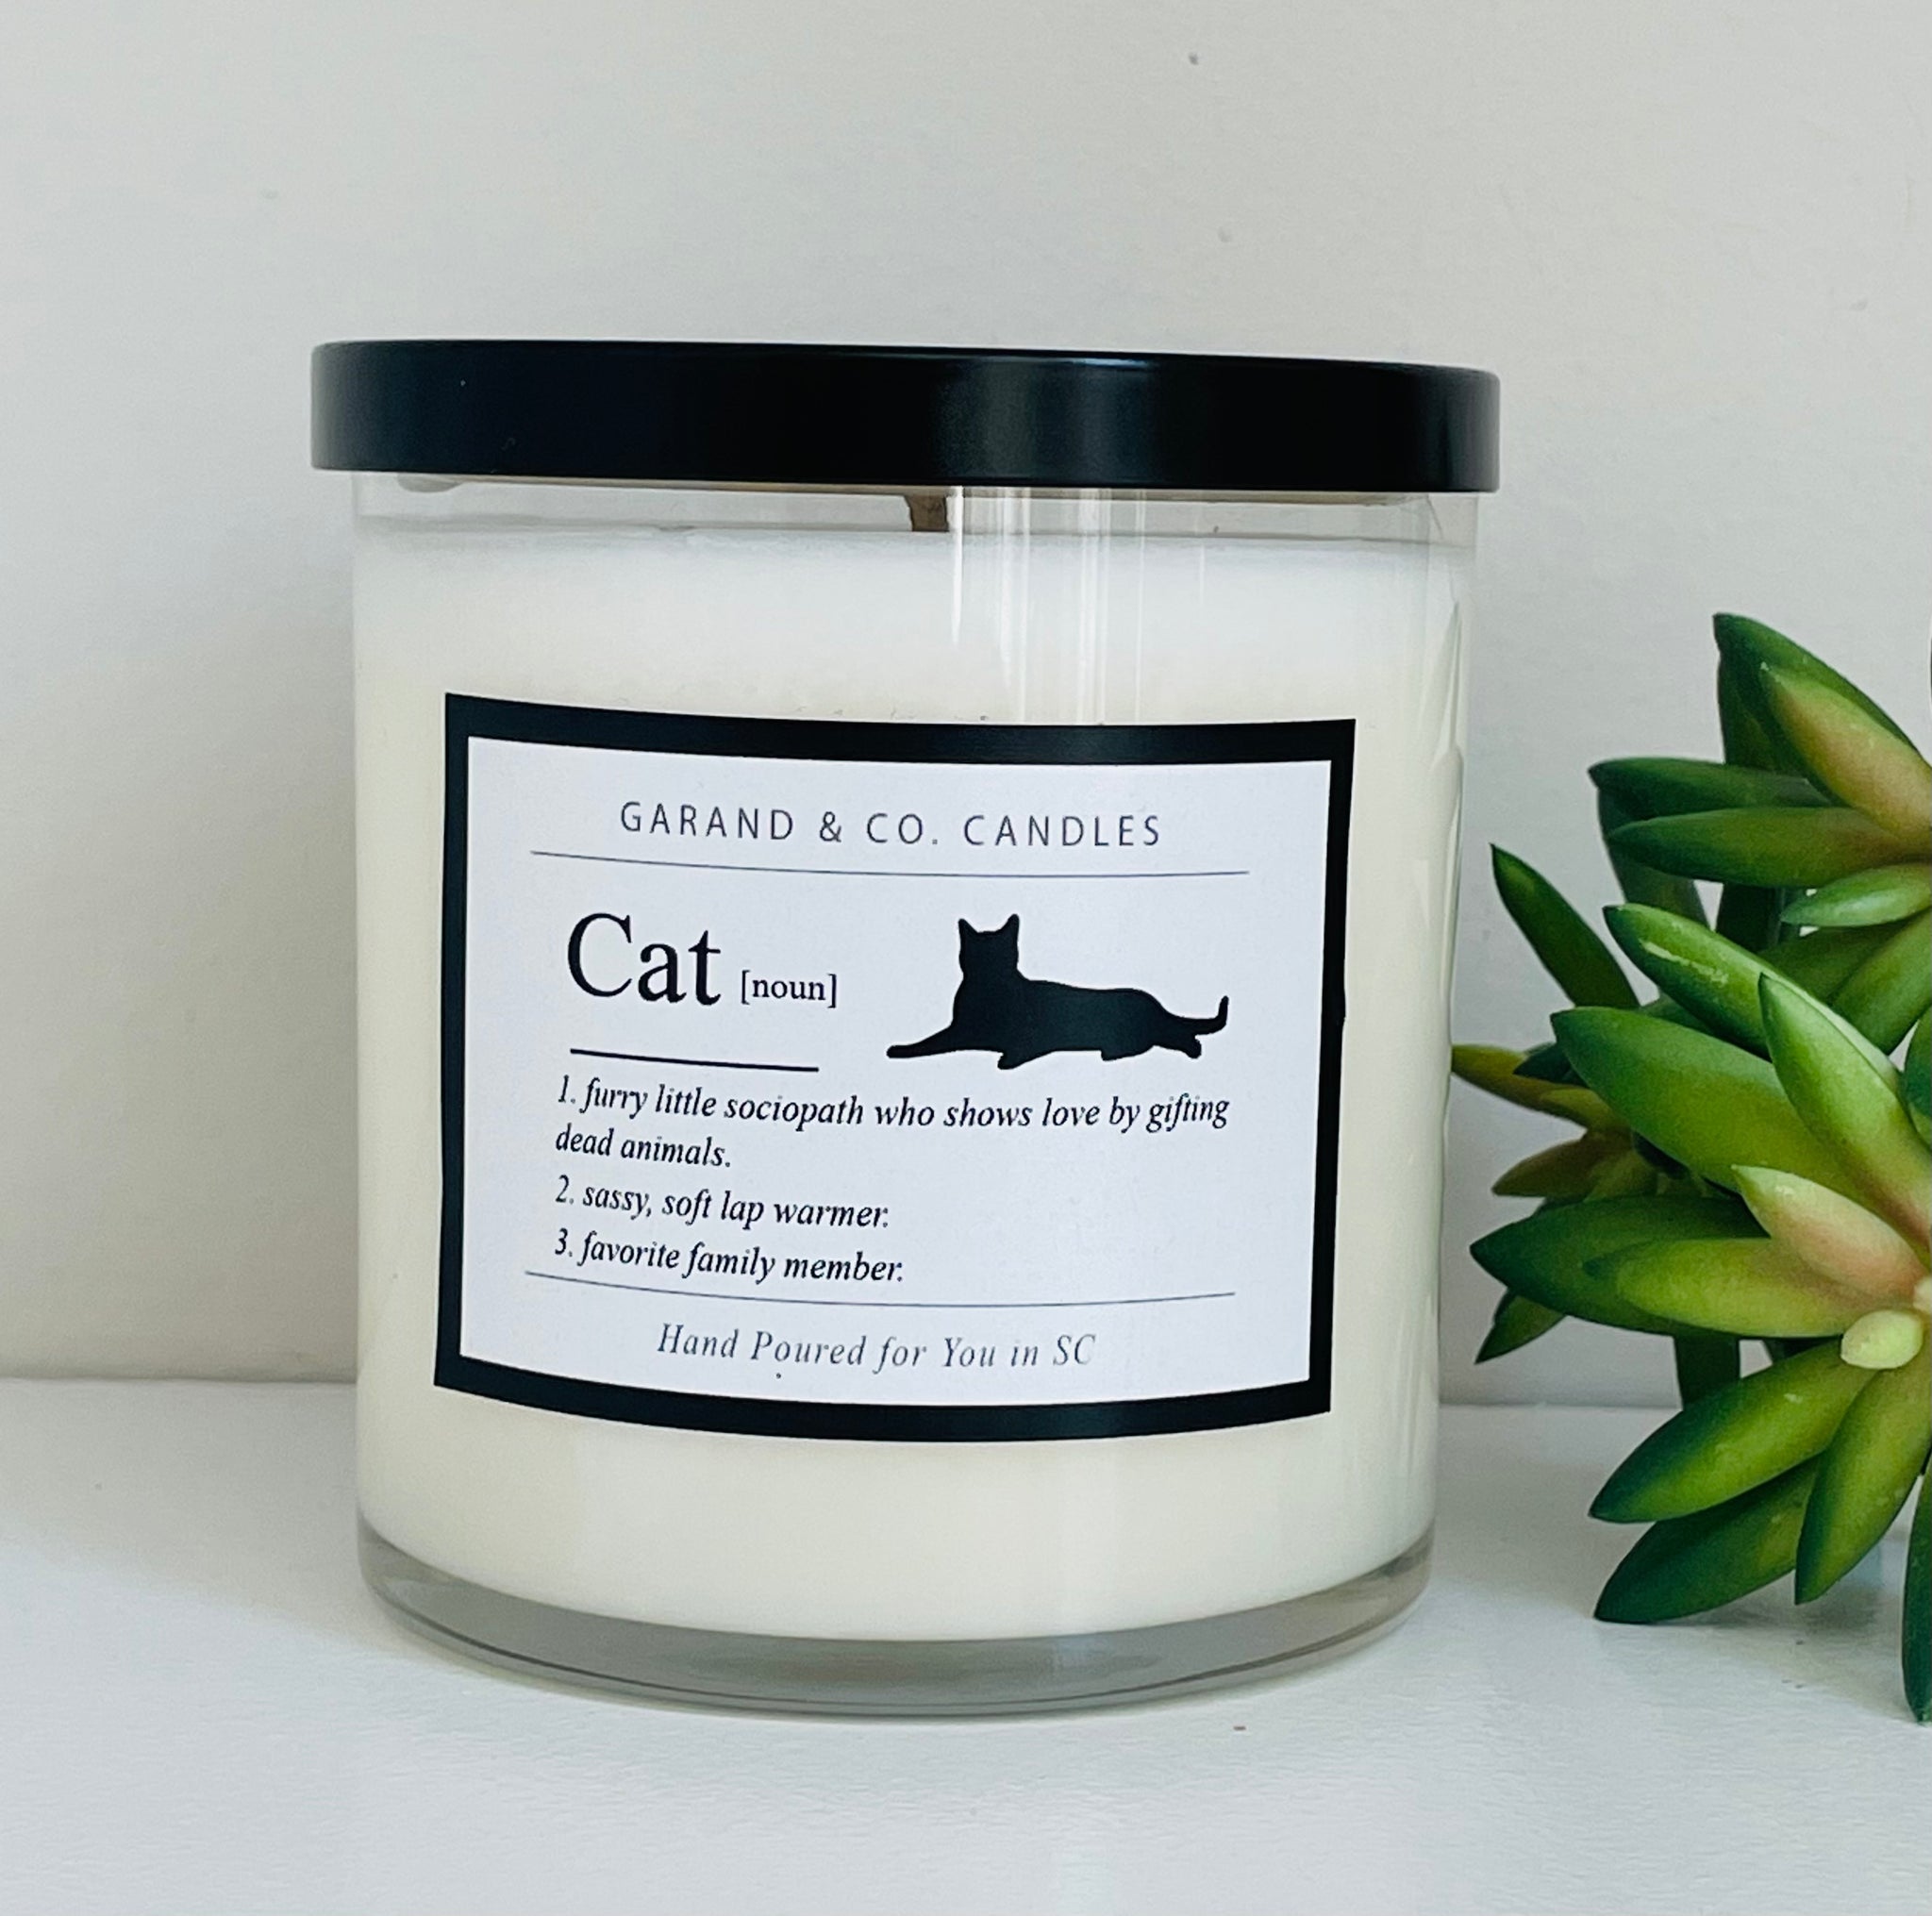 12 oz Clear Glass Jar Candle - Cat Noun